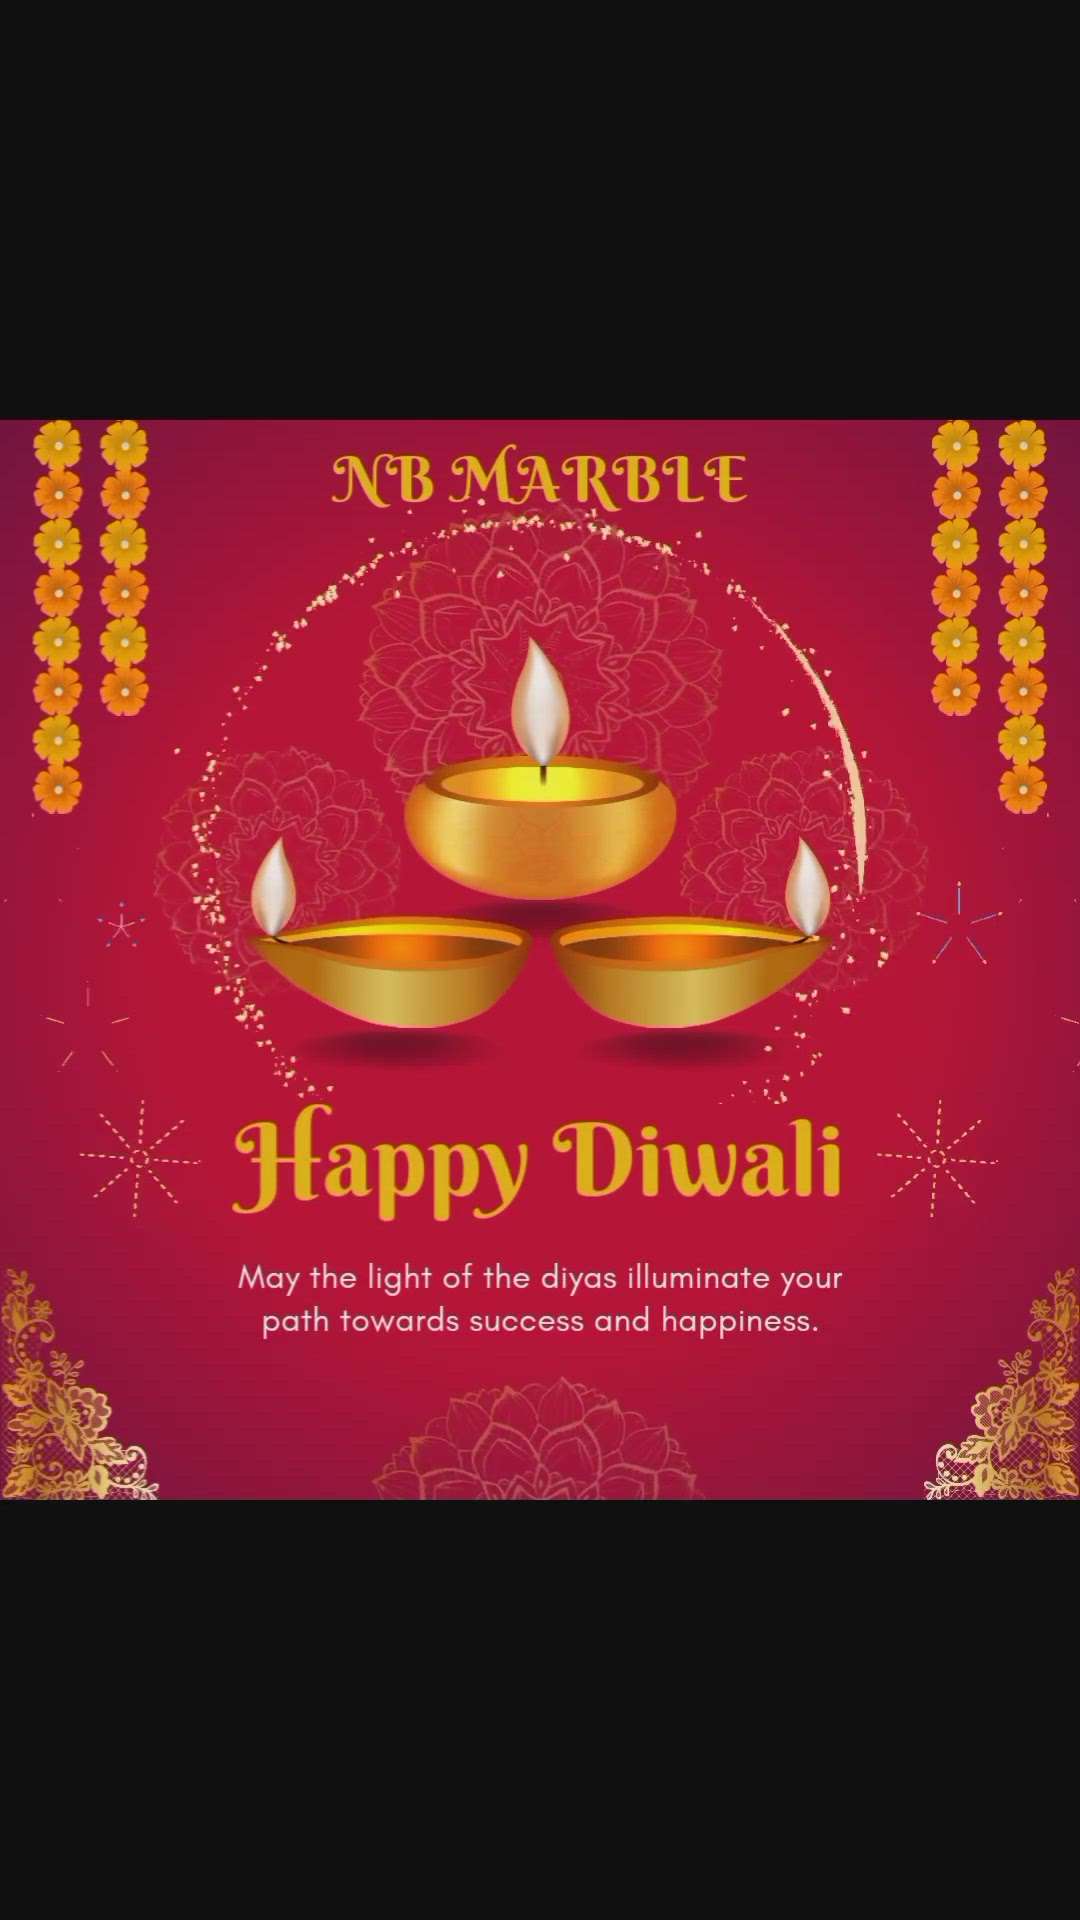 Happy Diwali 

Follow me 
https://instagram.com/nbmarble?utm_source=qr&igshid=MzNlNGNkZWQ4Mg%3D%3D

More Information Contact Me
8233078099

#diwali #nbmarble #happydiwali #diwalivibes✨